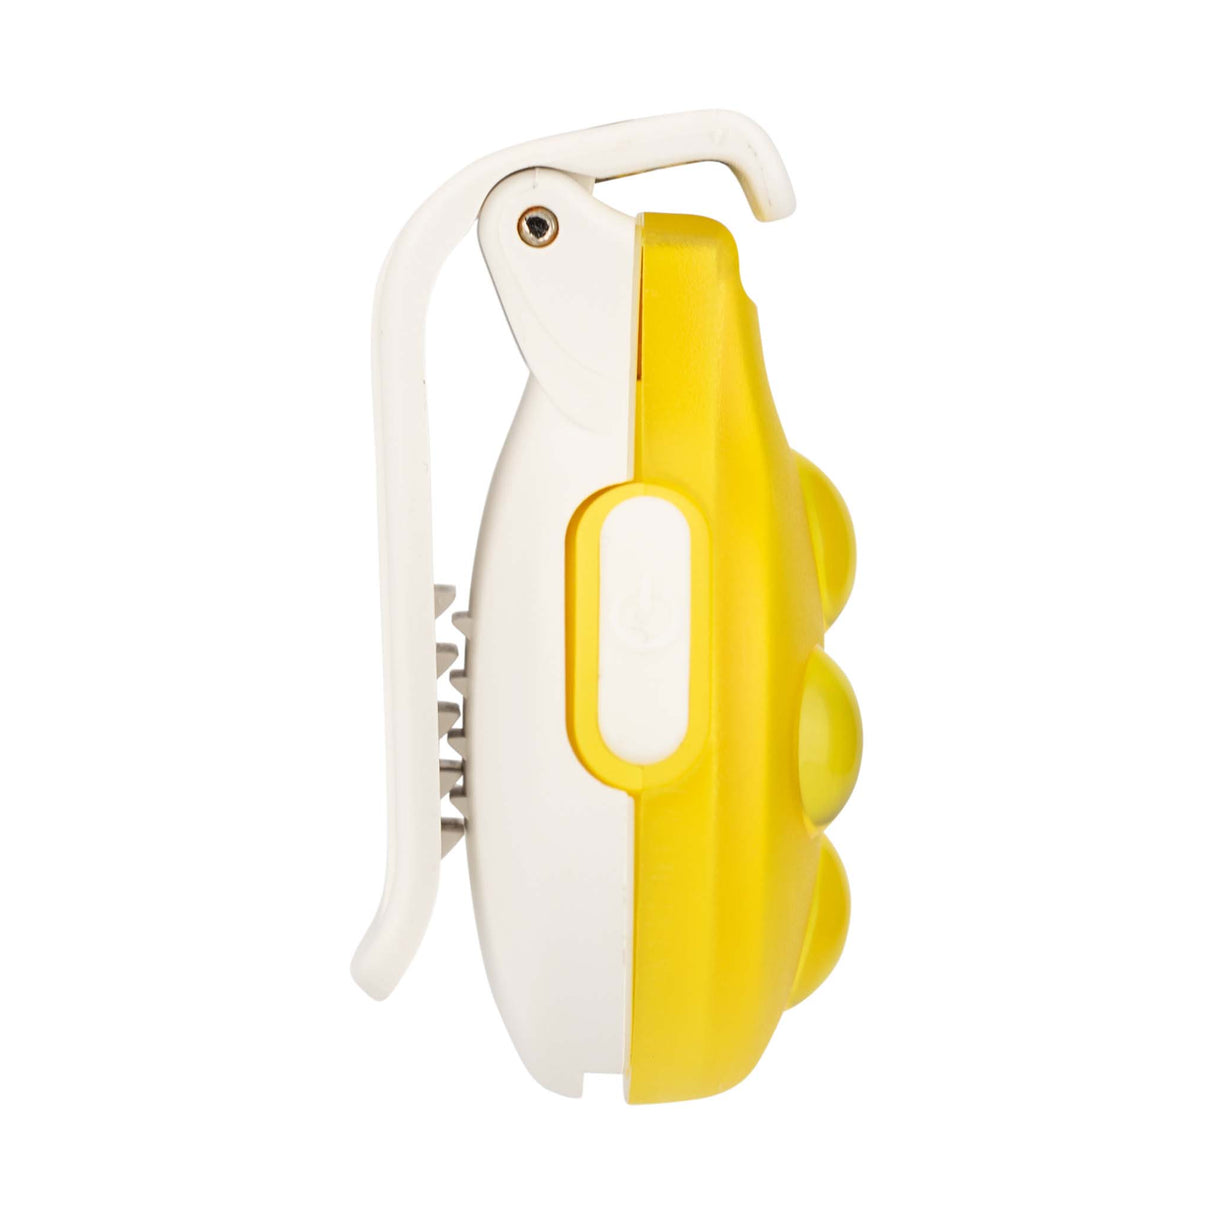 Nathan HyperBrite Orb Strobe clip lumineux stroboscopique de course à pied vibrant yellow lateral